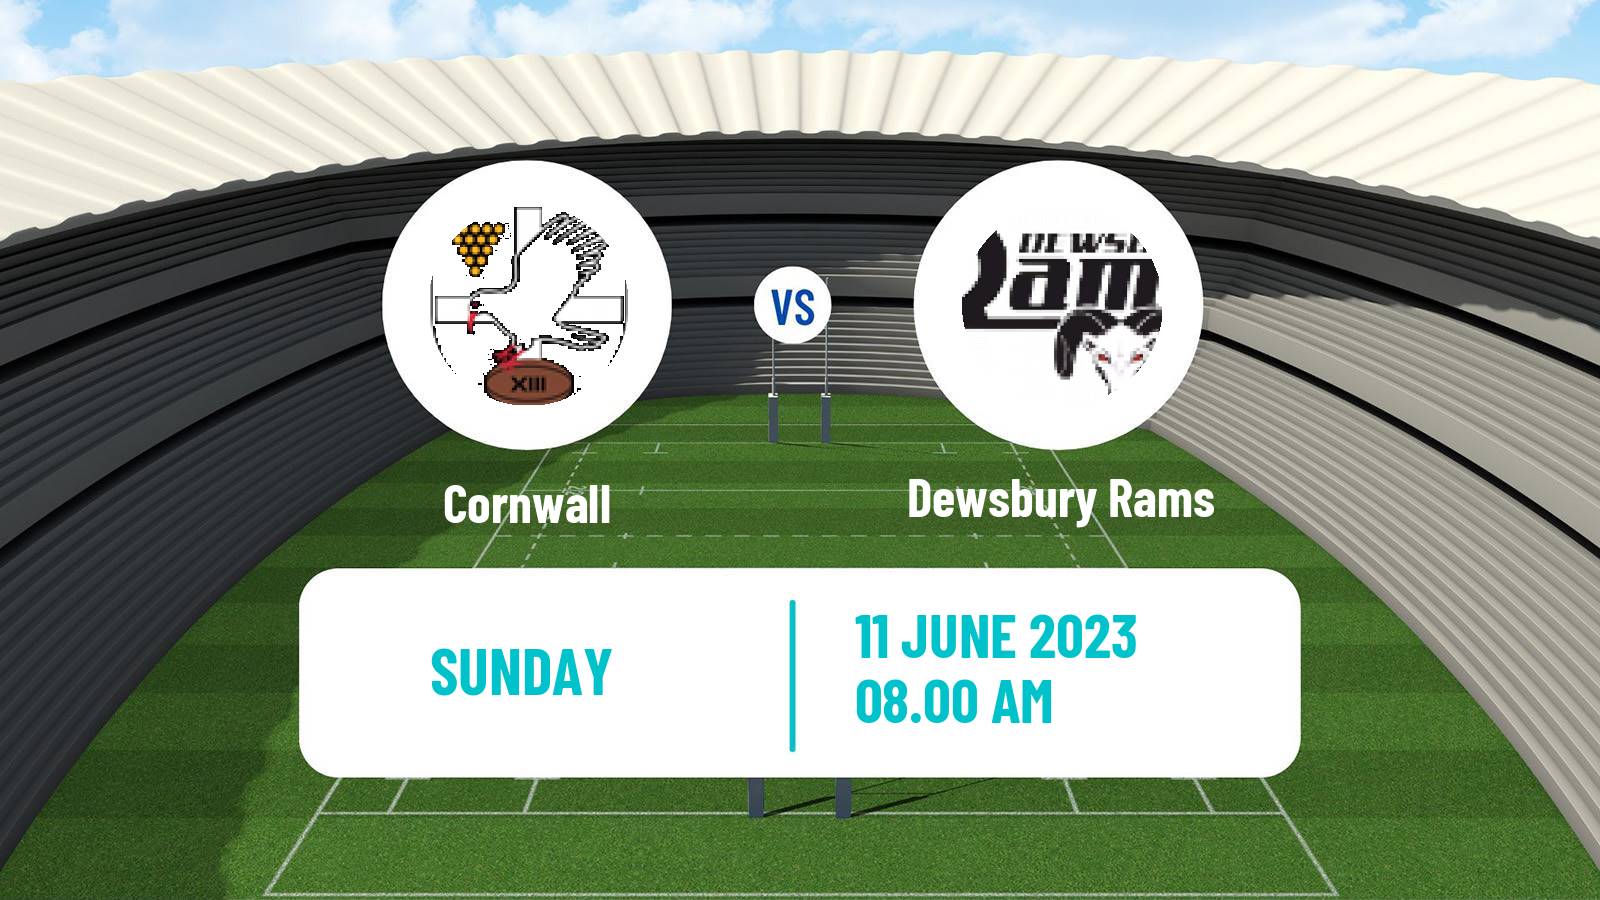 Rugby league English League 1 Rugby League Cornwall - Dewsbury Rams